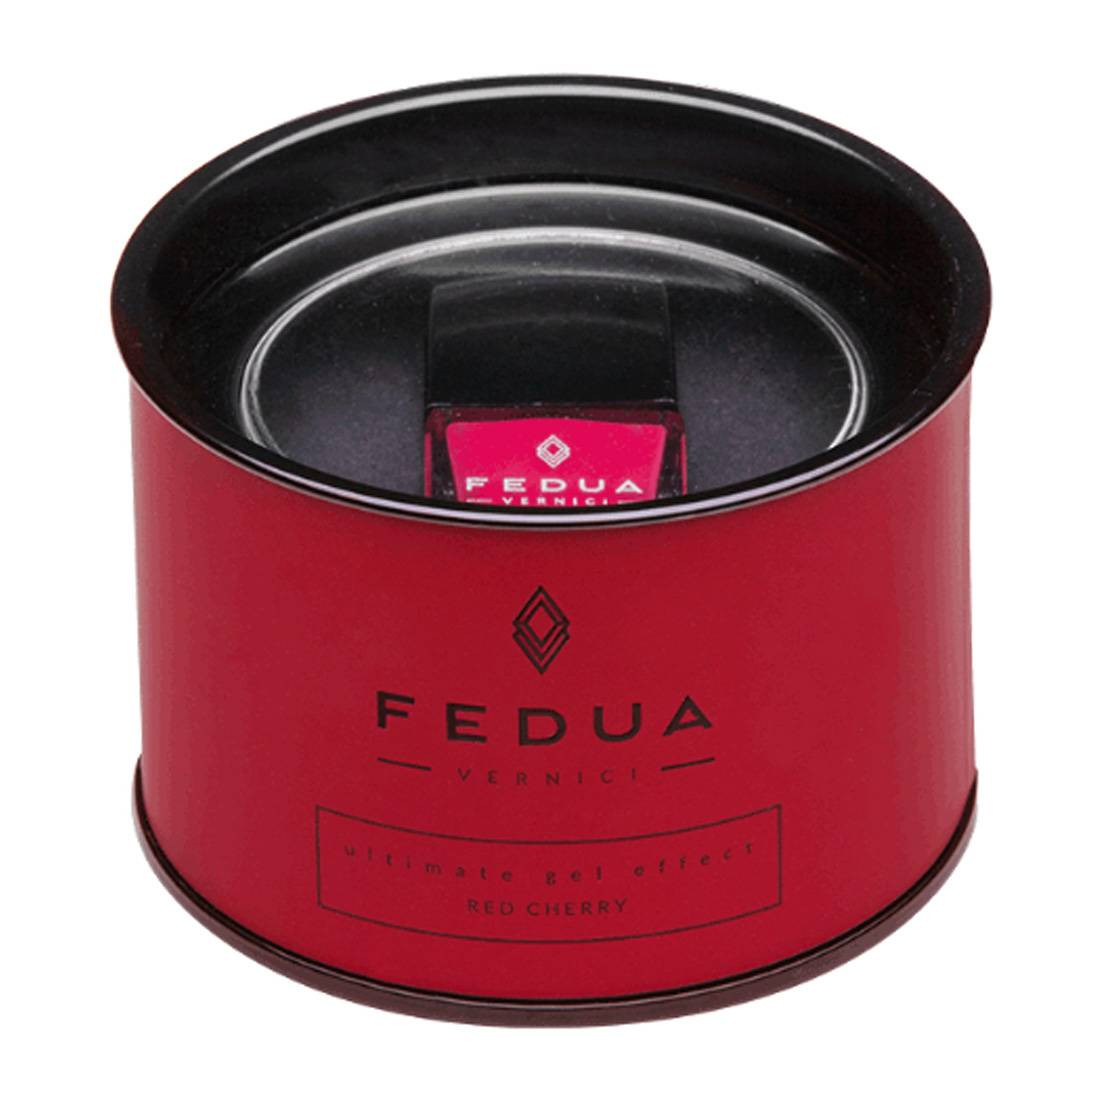 Fedua Vernici Ultimate Collection Red Cherry - Лак для нігтів Червона вишня